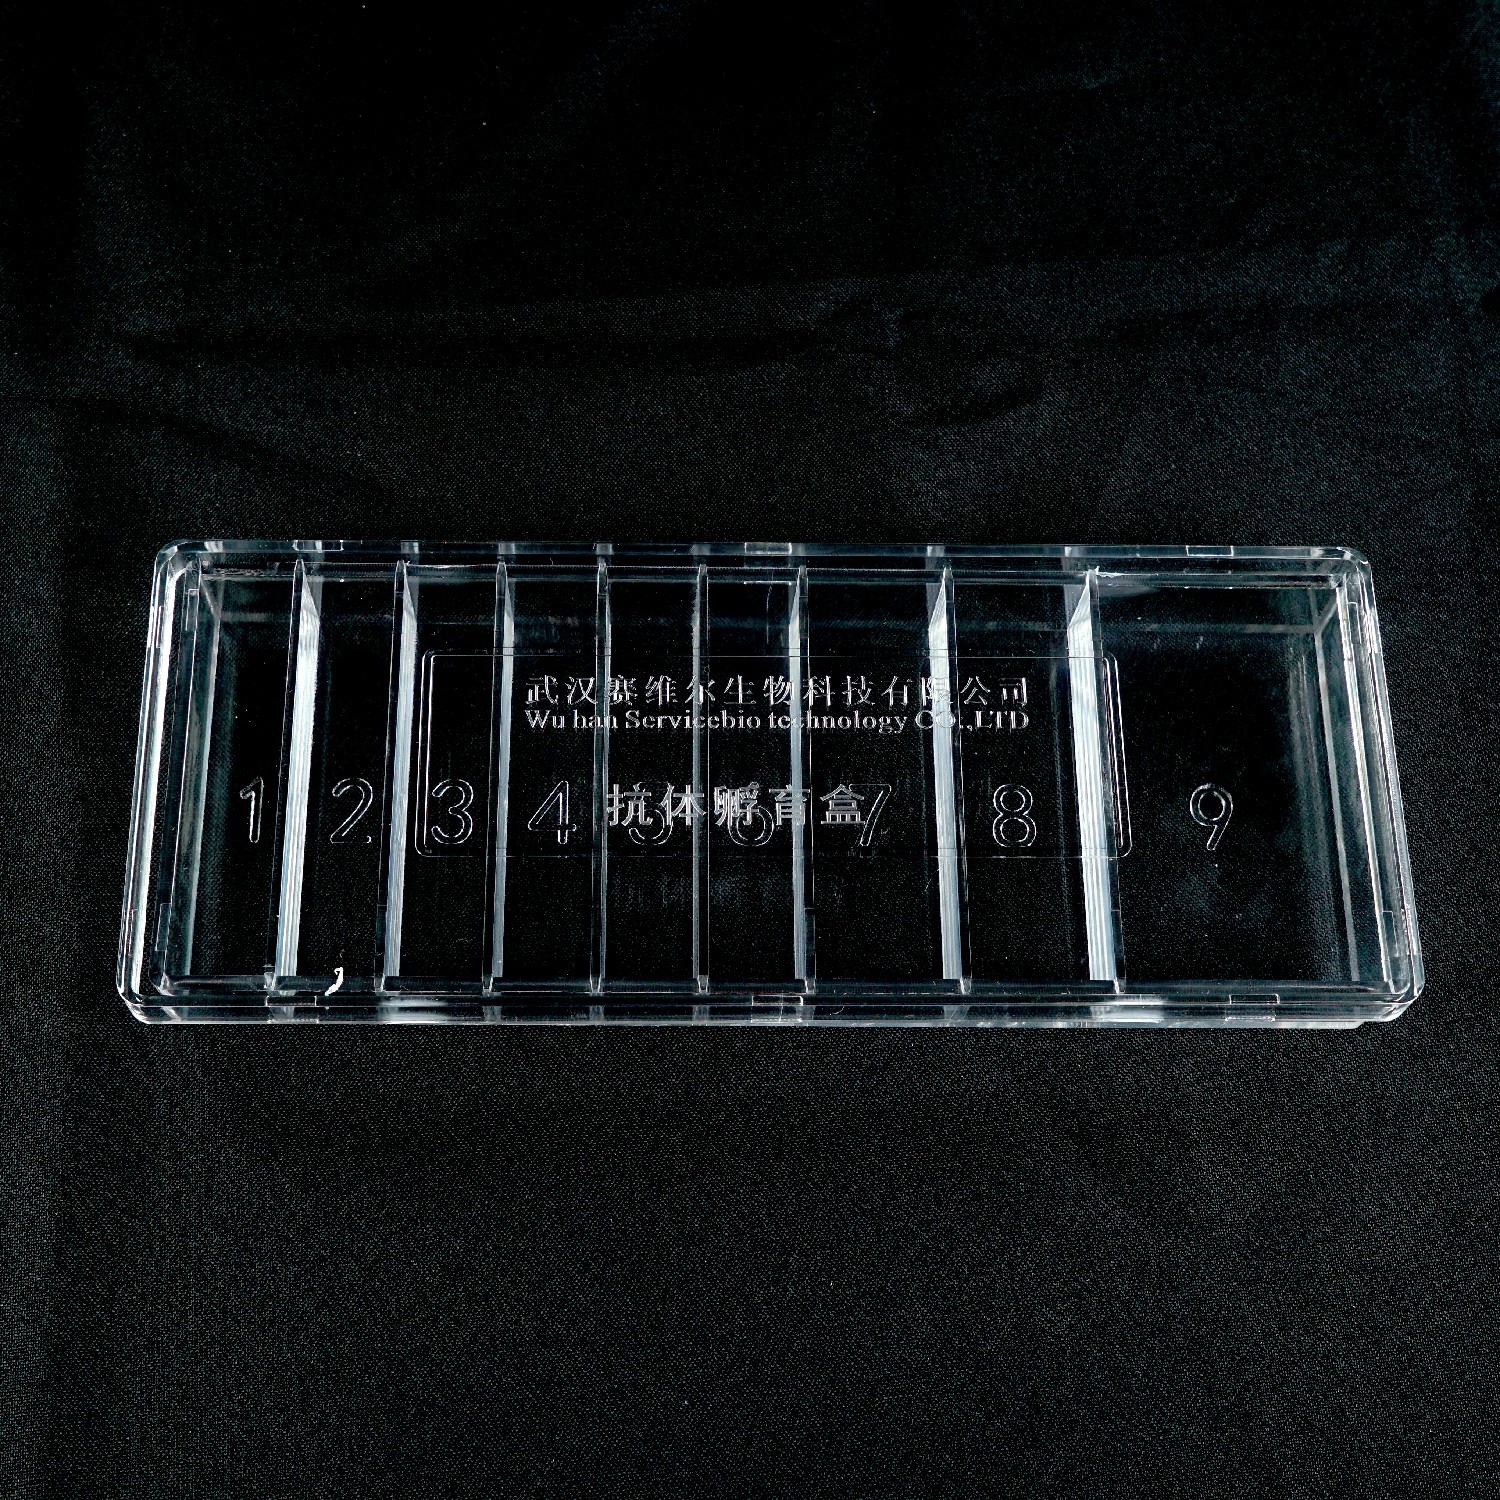 Inkubationsbox 9 Gitter transparent für Antikörper-Inkubation Acrylkiste für WB